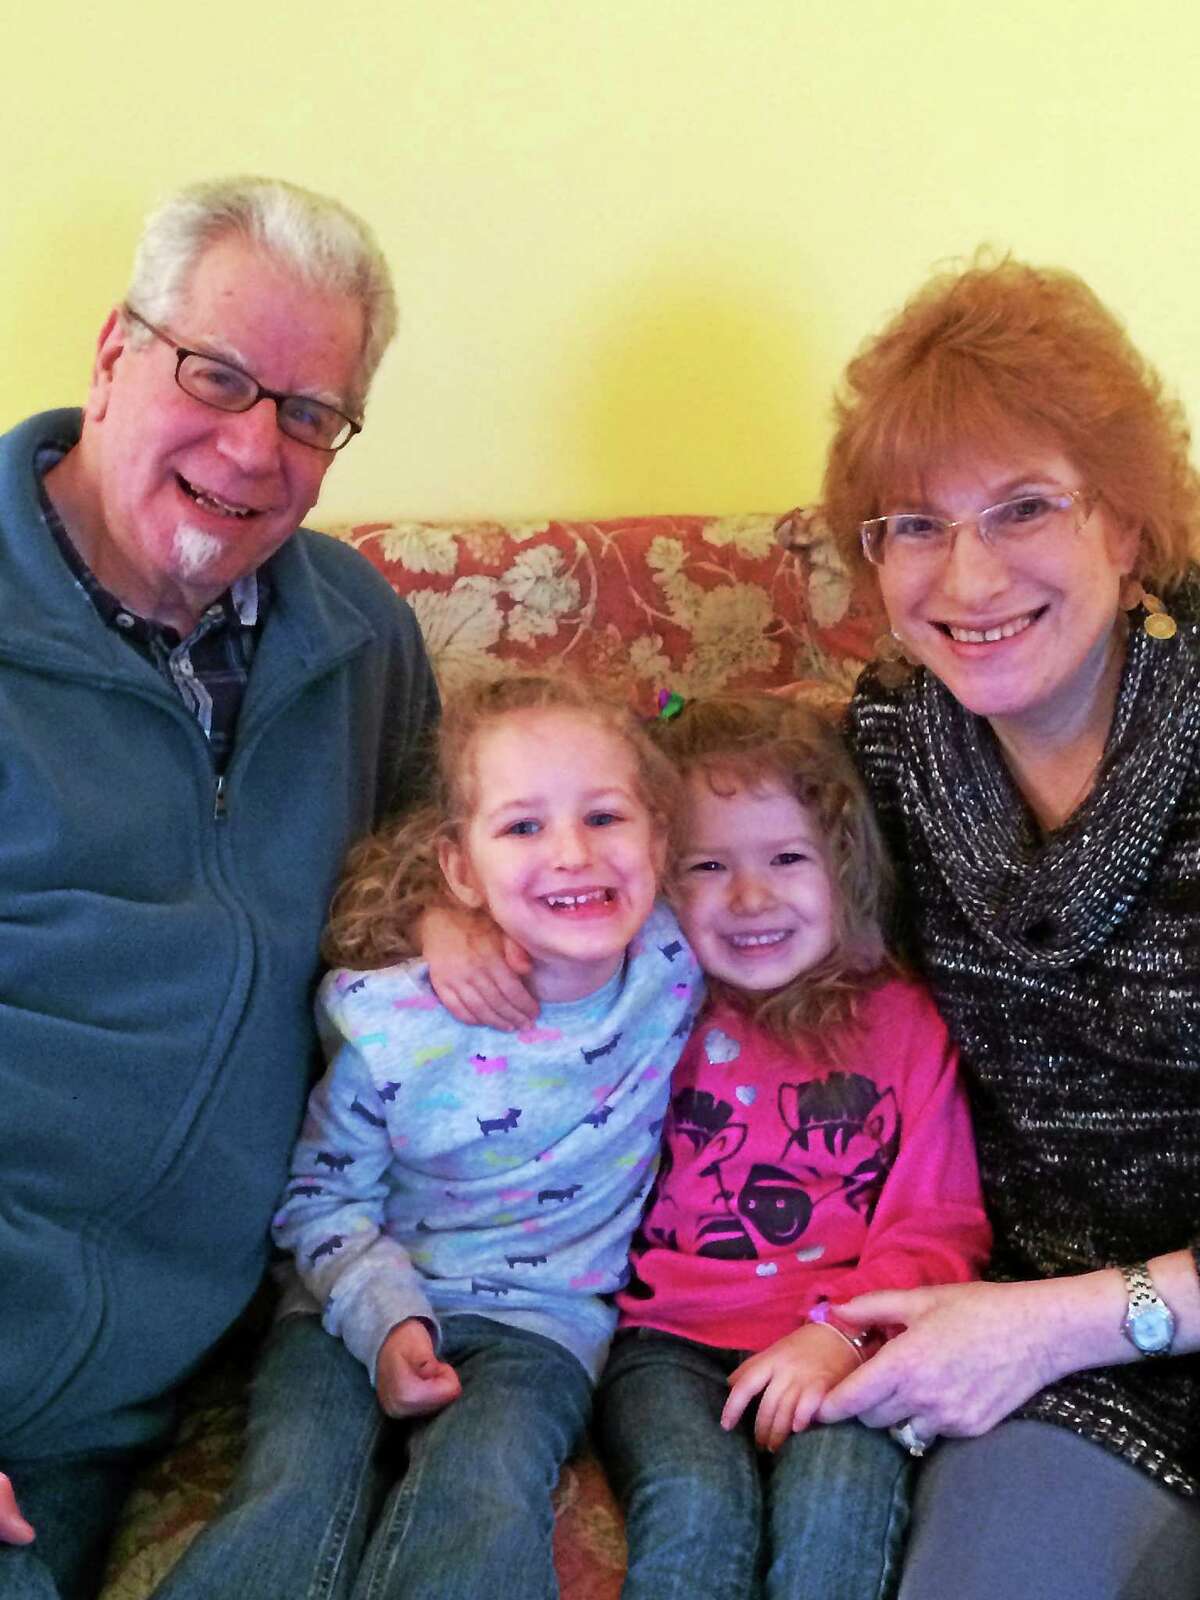 Joel and Barbara Levitt with grandchildren Haley and Briella Bittner.